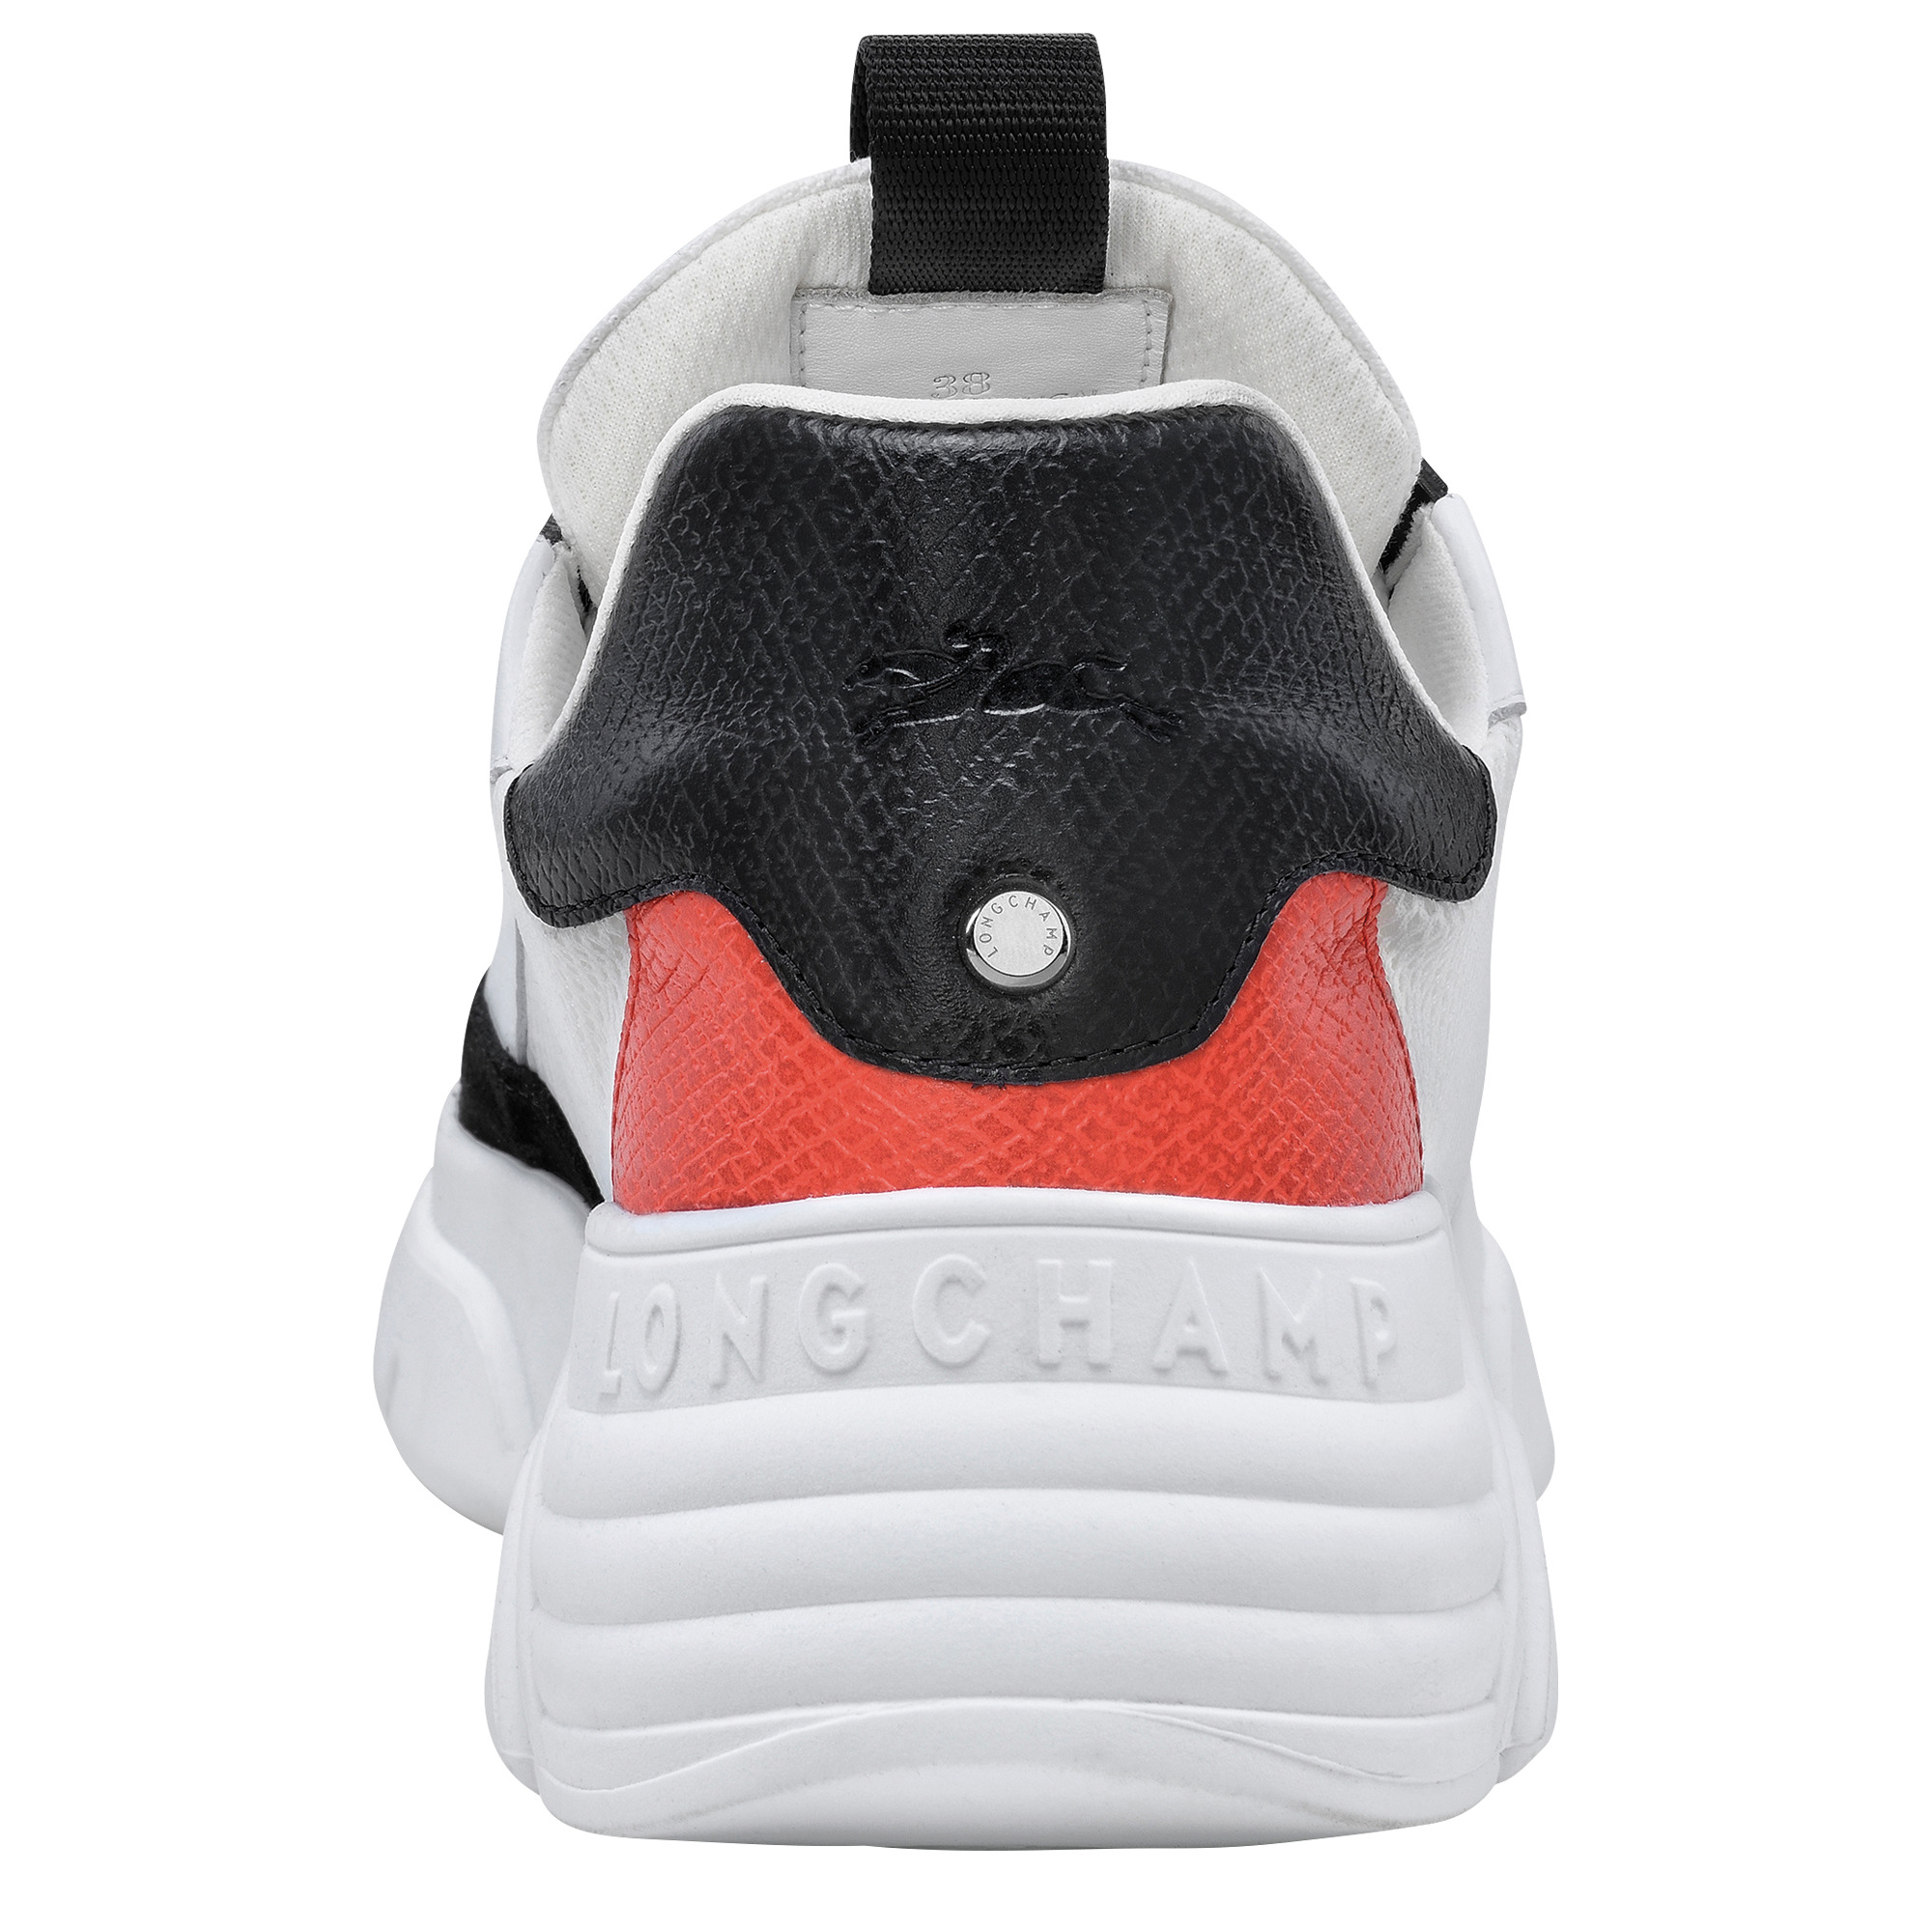 Freeminder Sneakers Poppy - Leather - 3